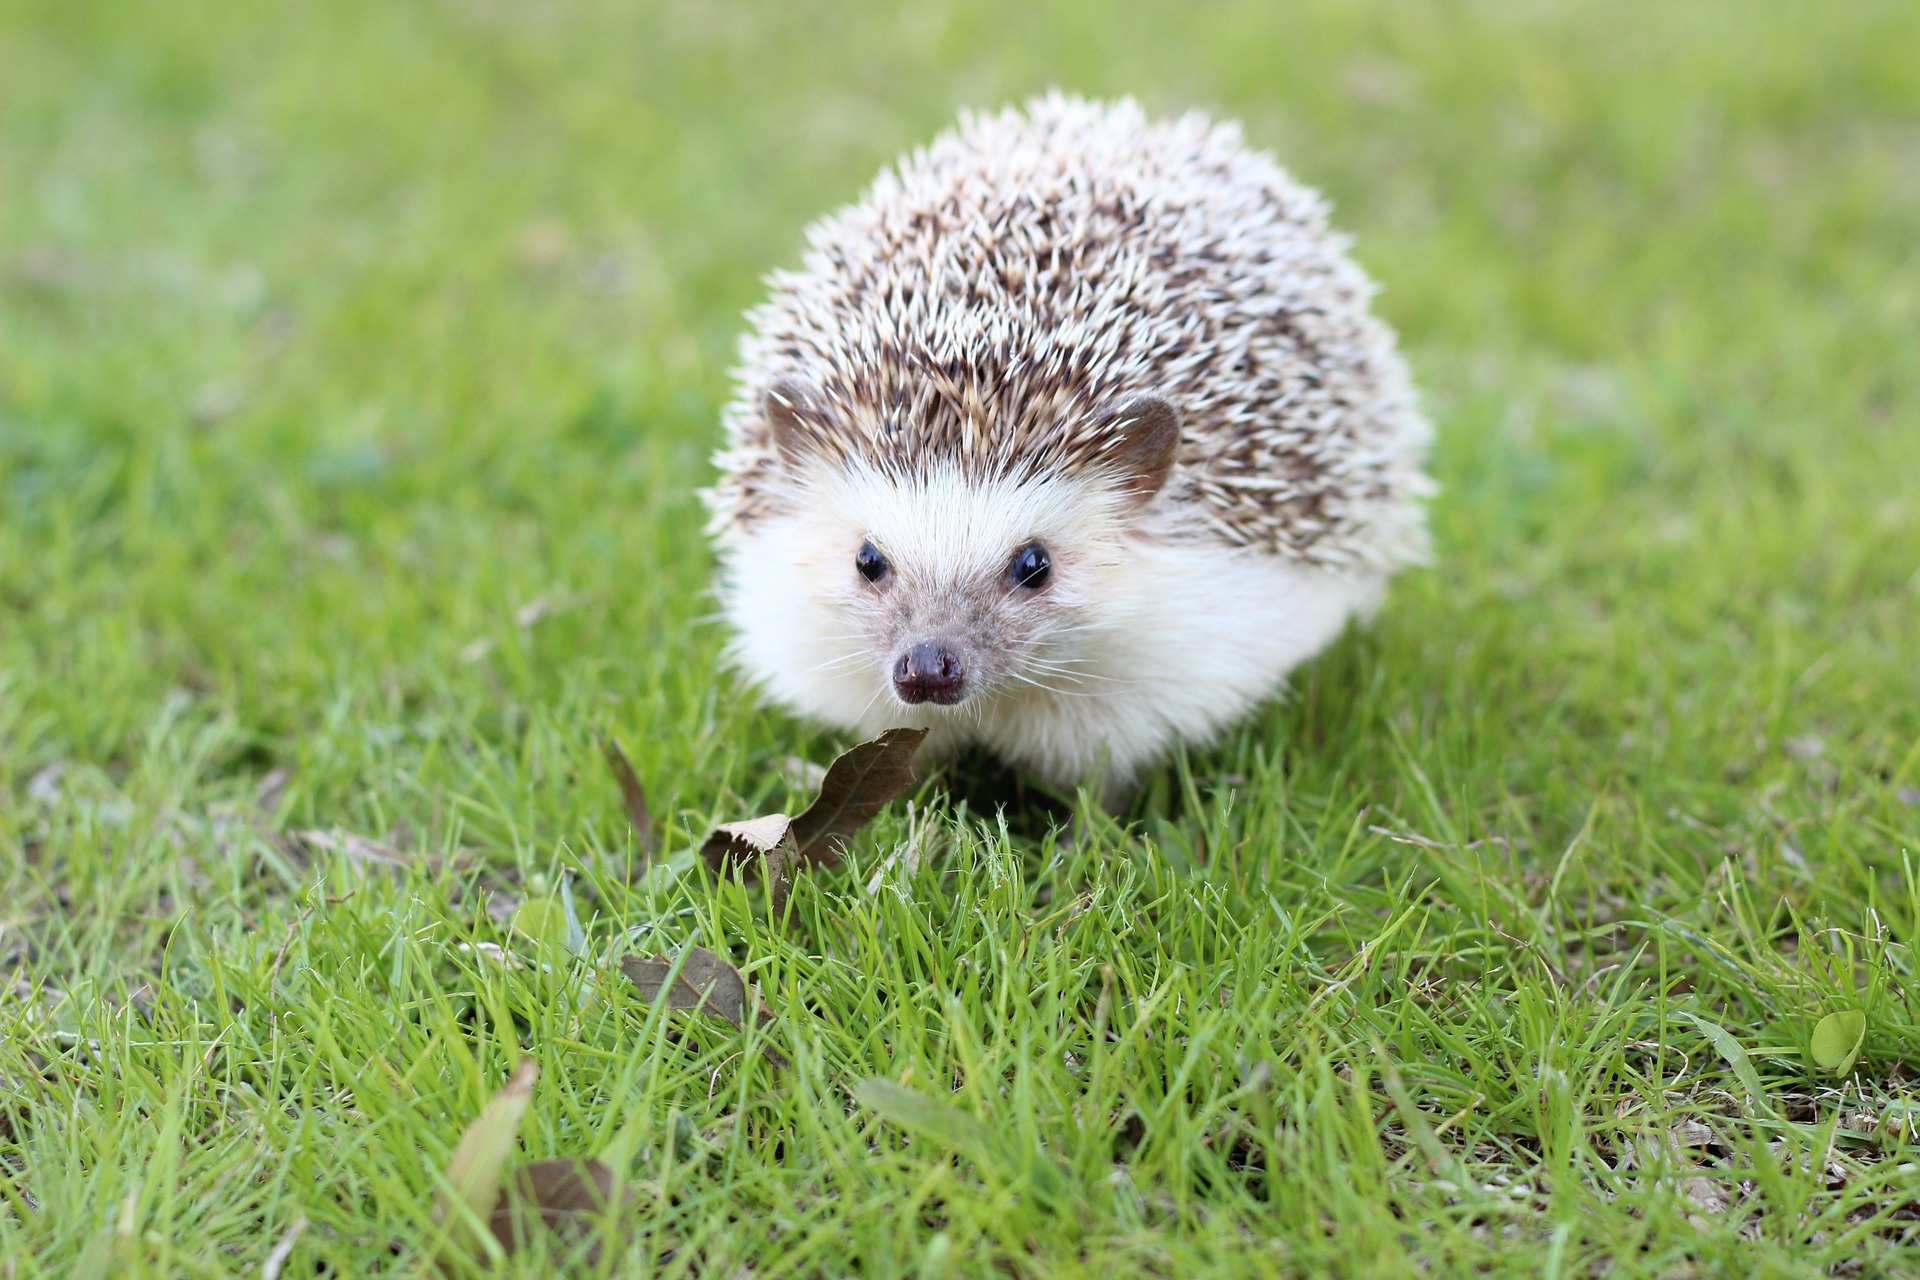 Hedgehogs in Surrey and across UK at risk of extinction | Surrey Comet